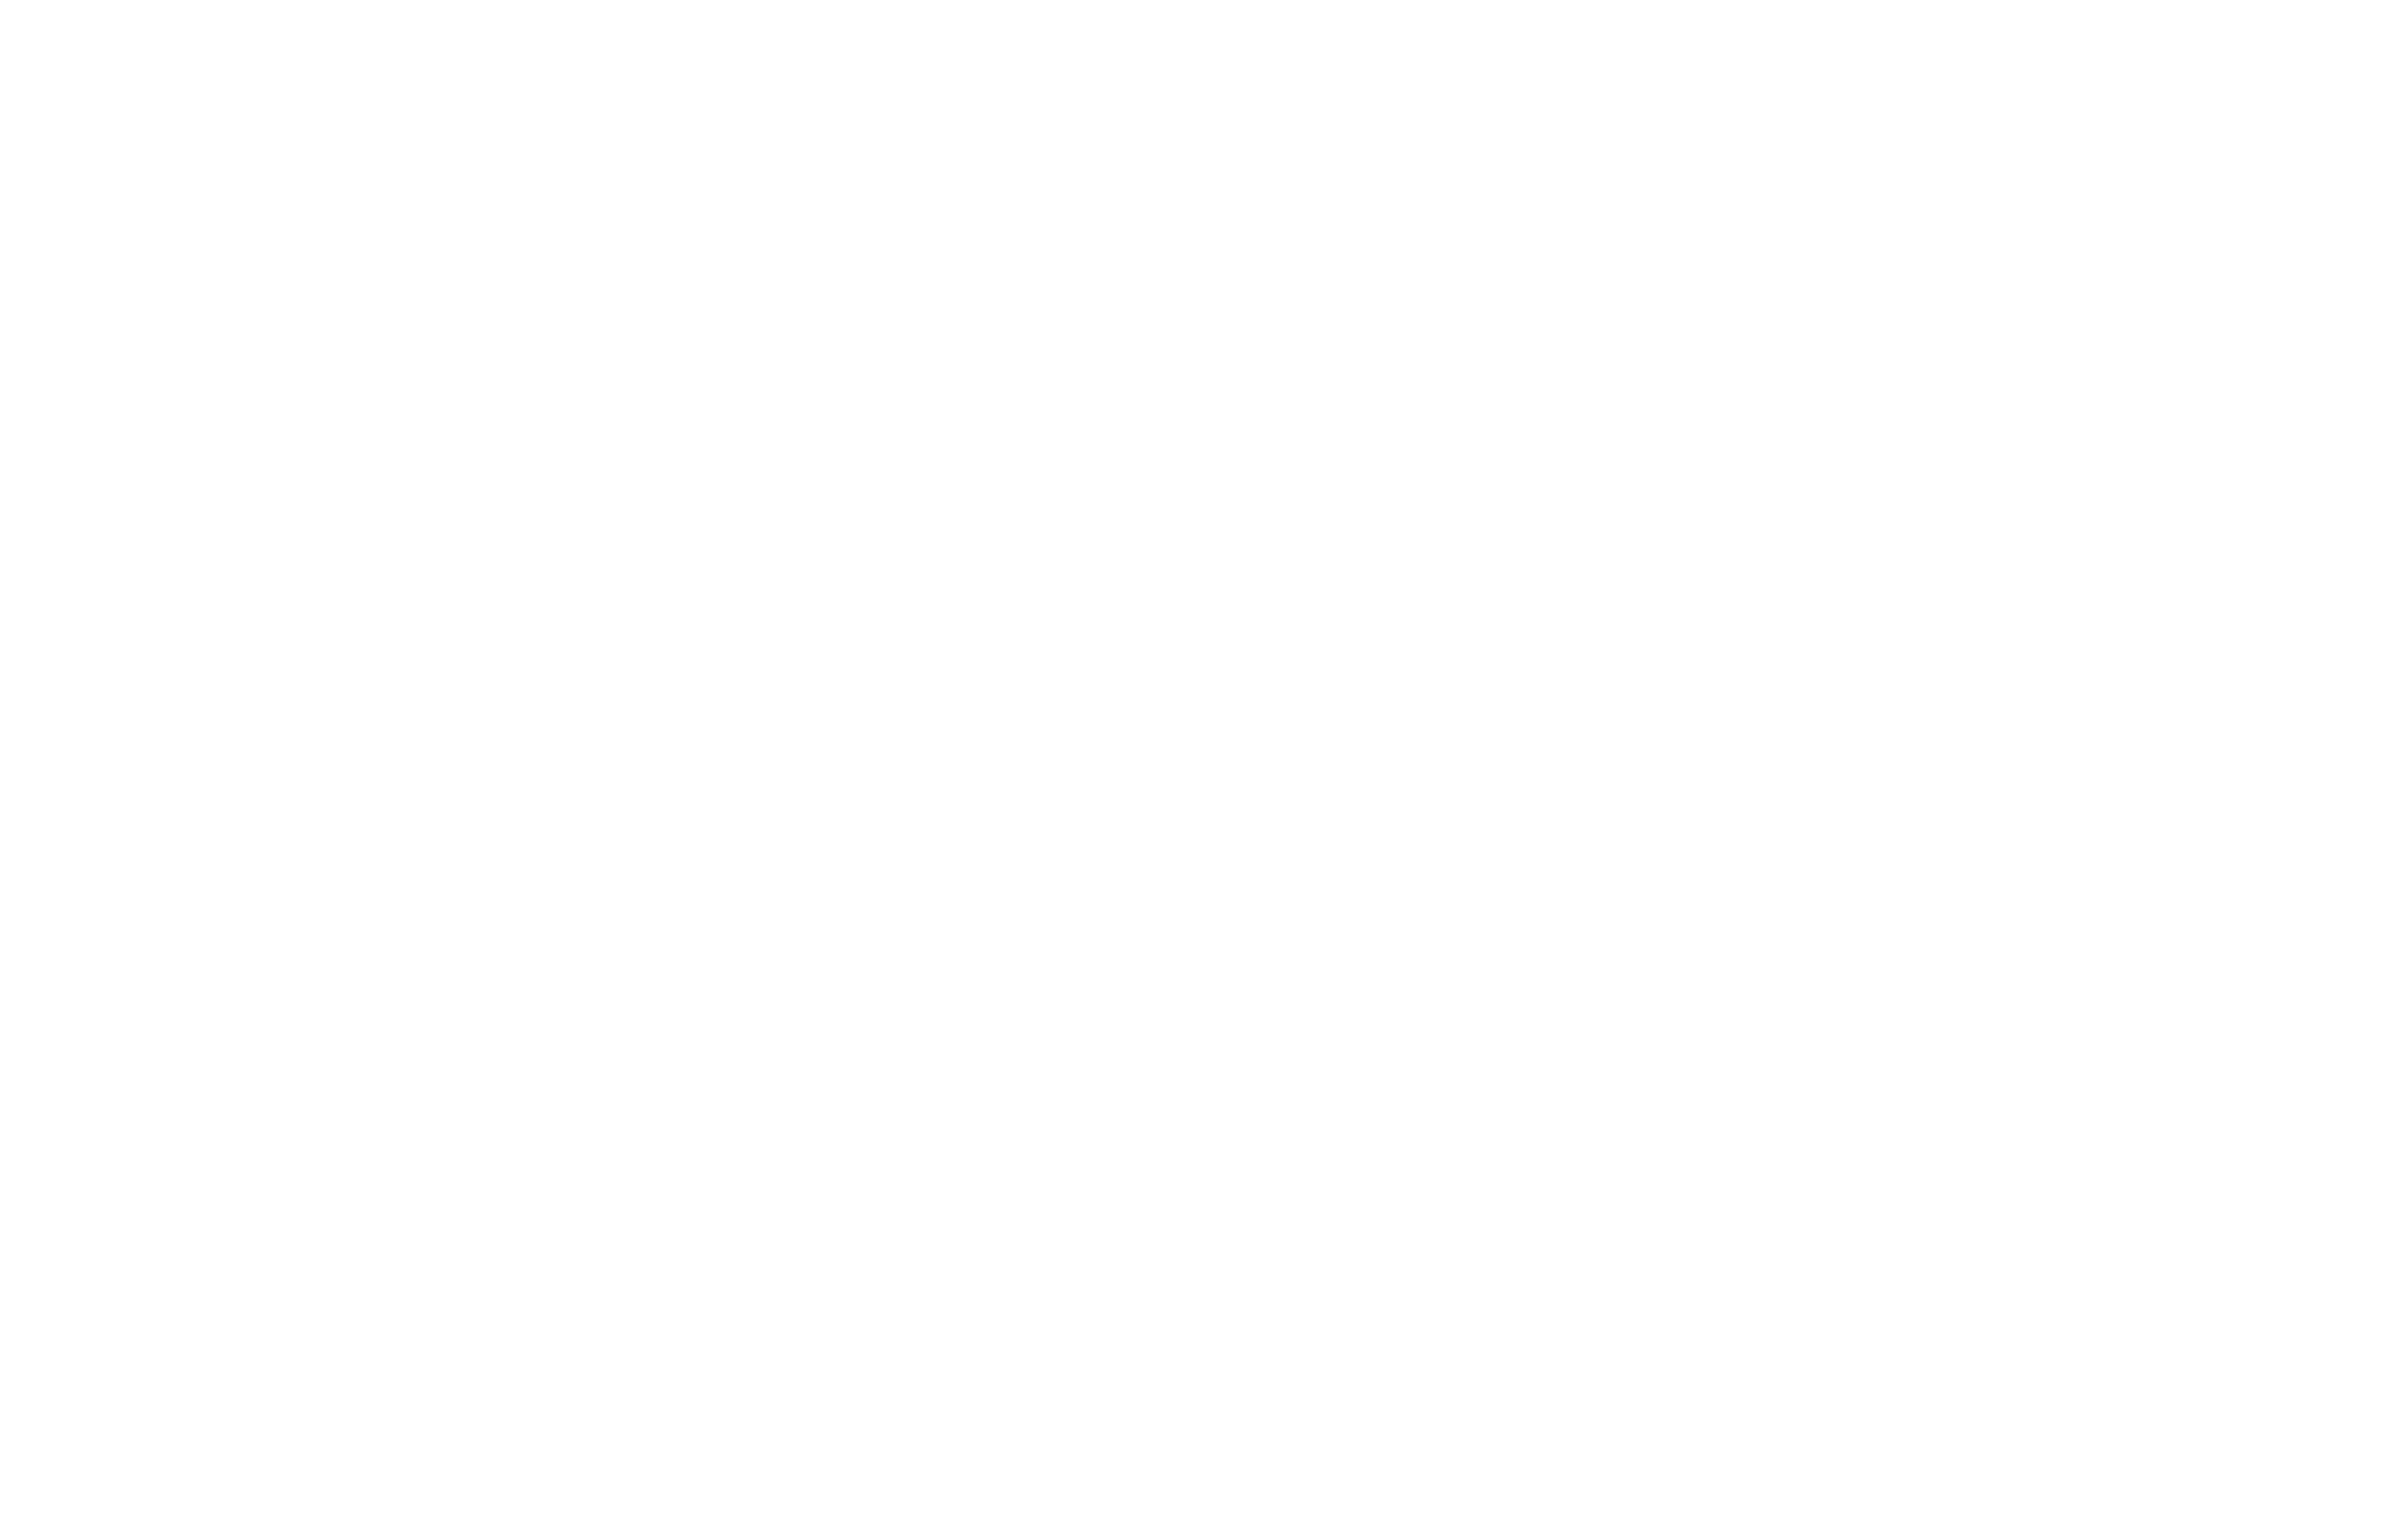 crossroads logo